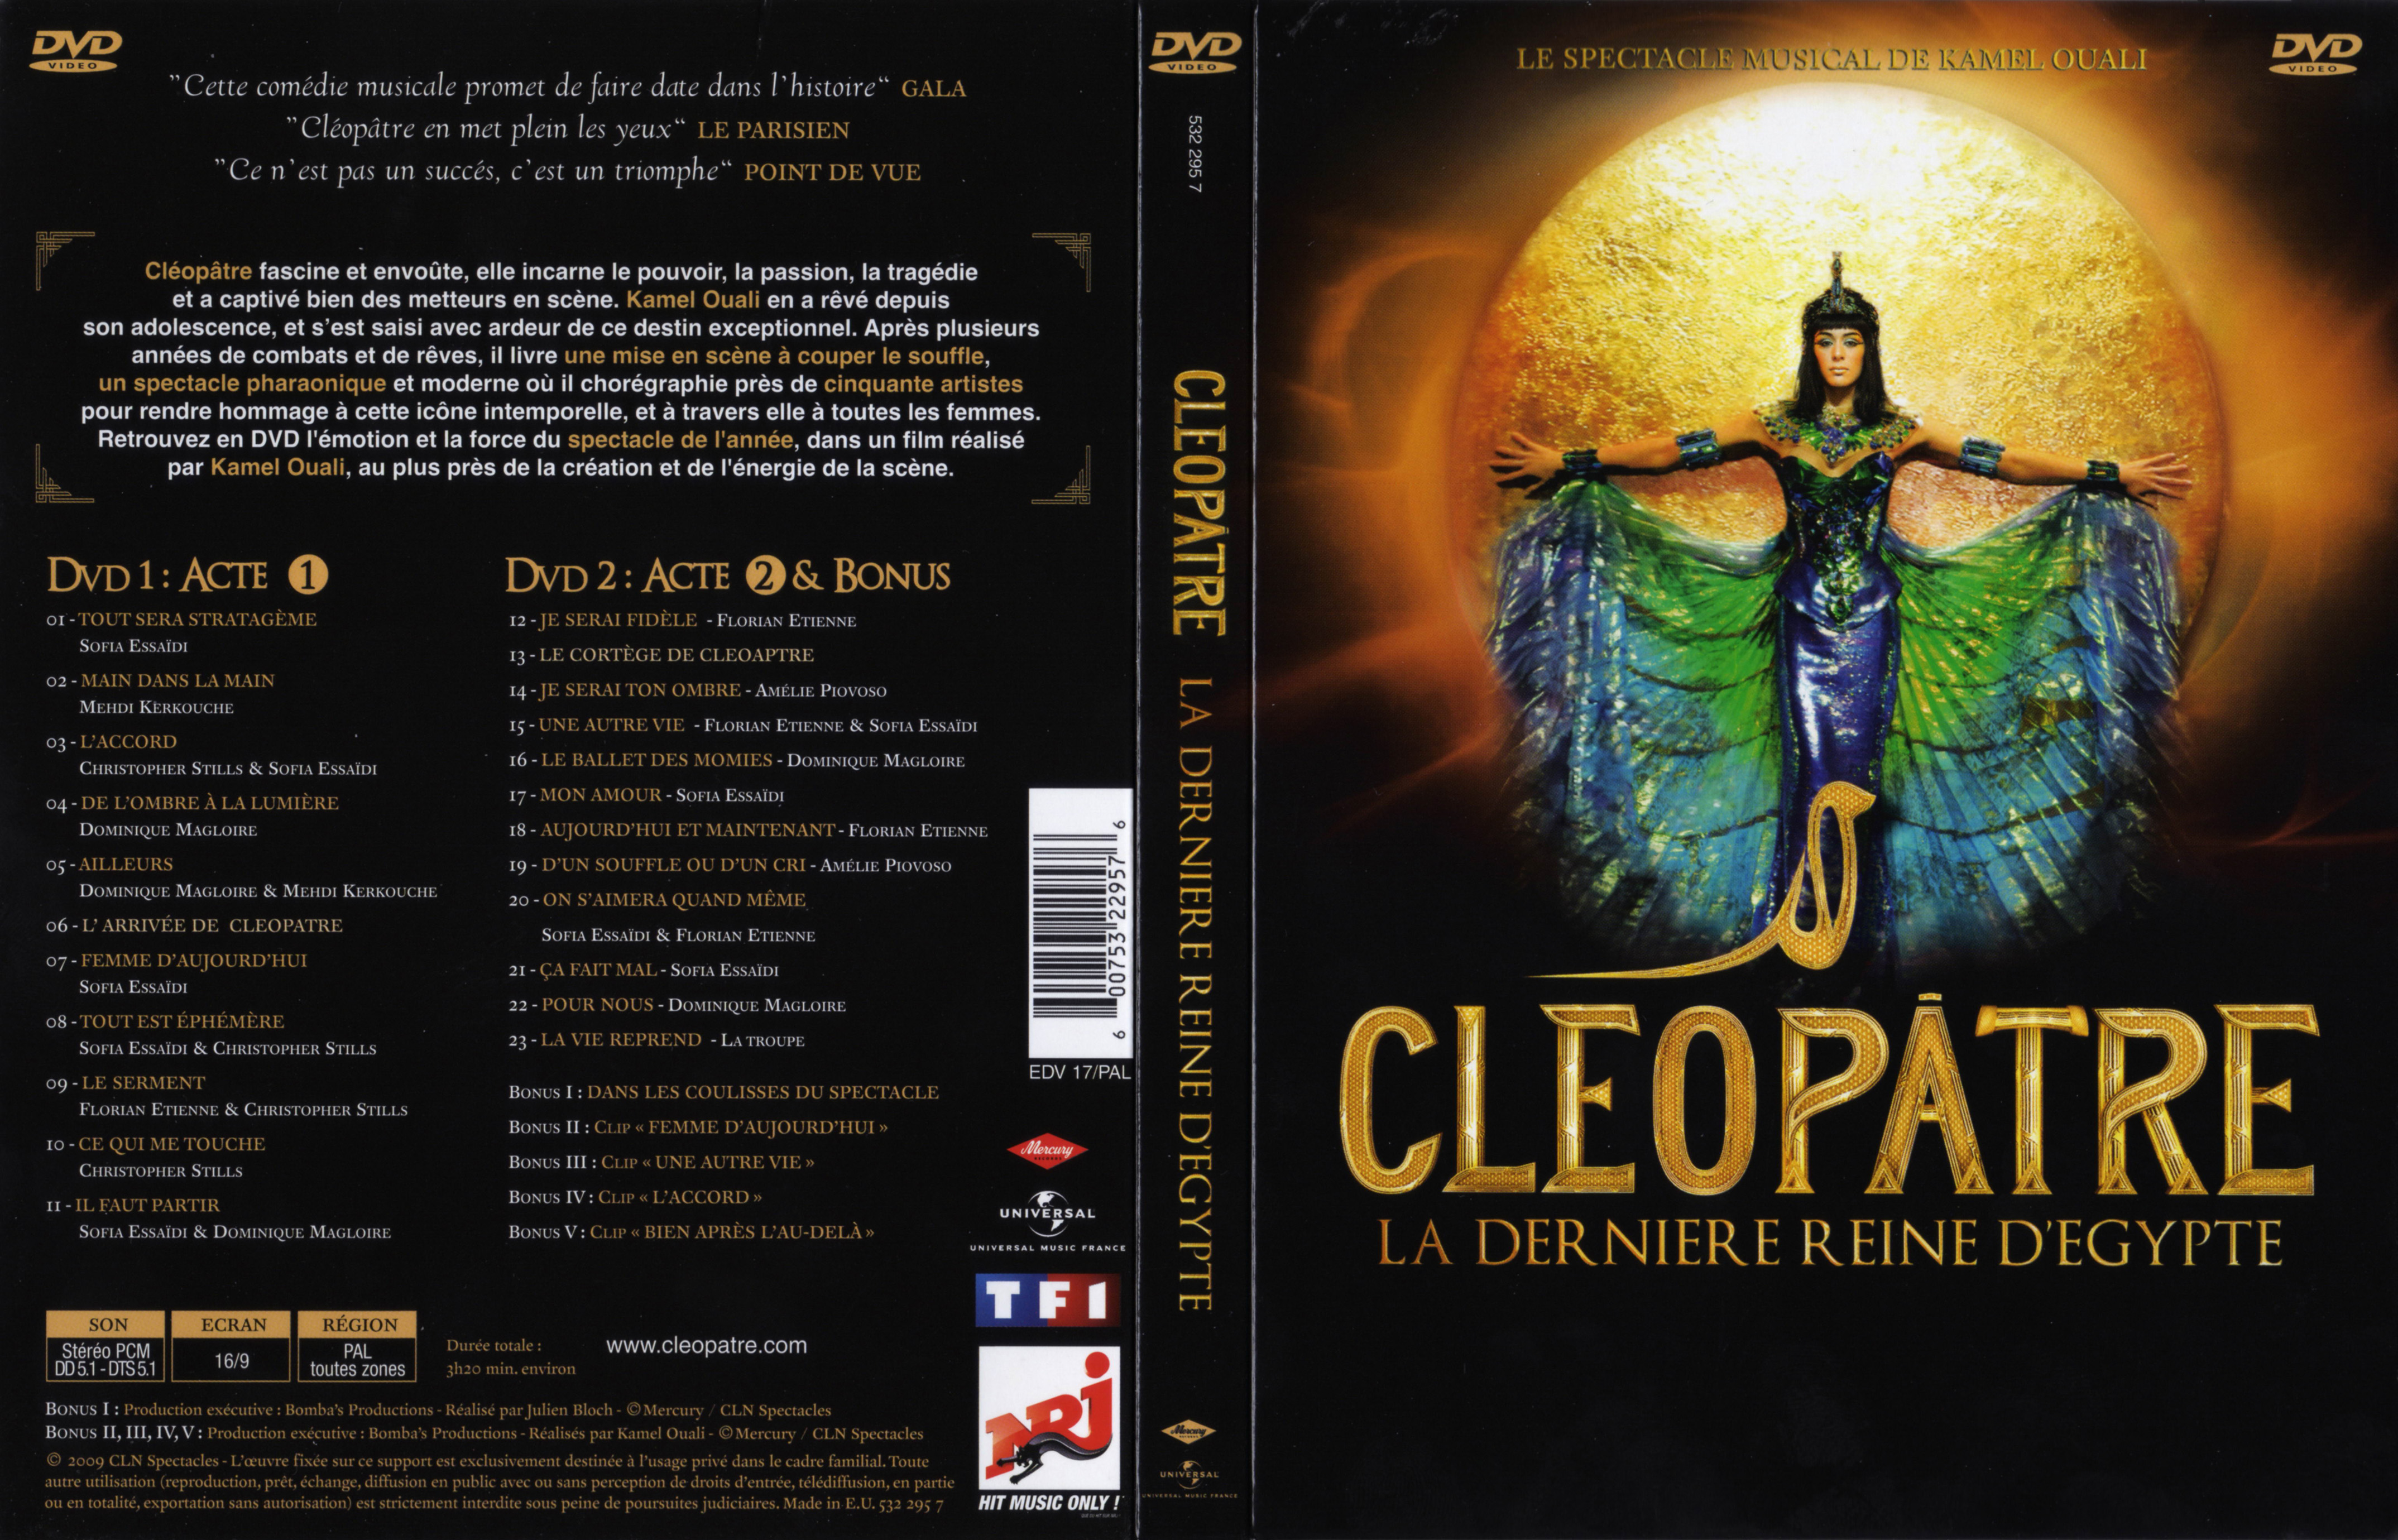 Jaquette DVD Cleopatre - Comdie musicale